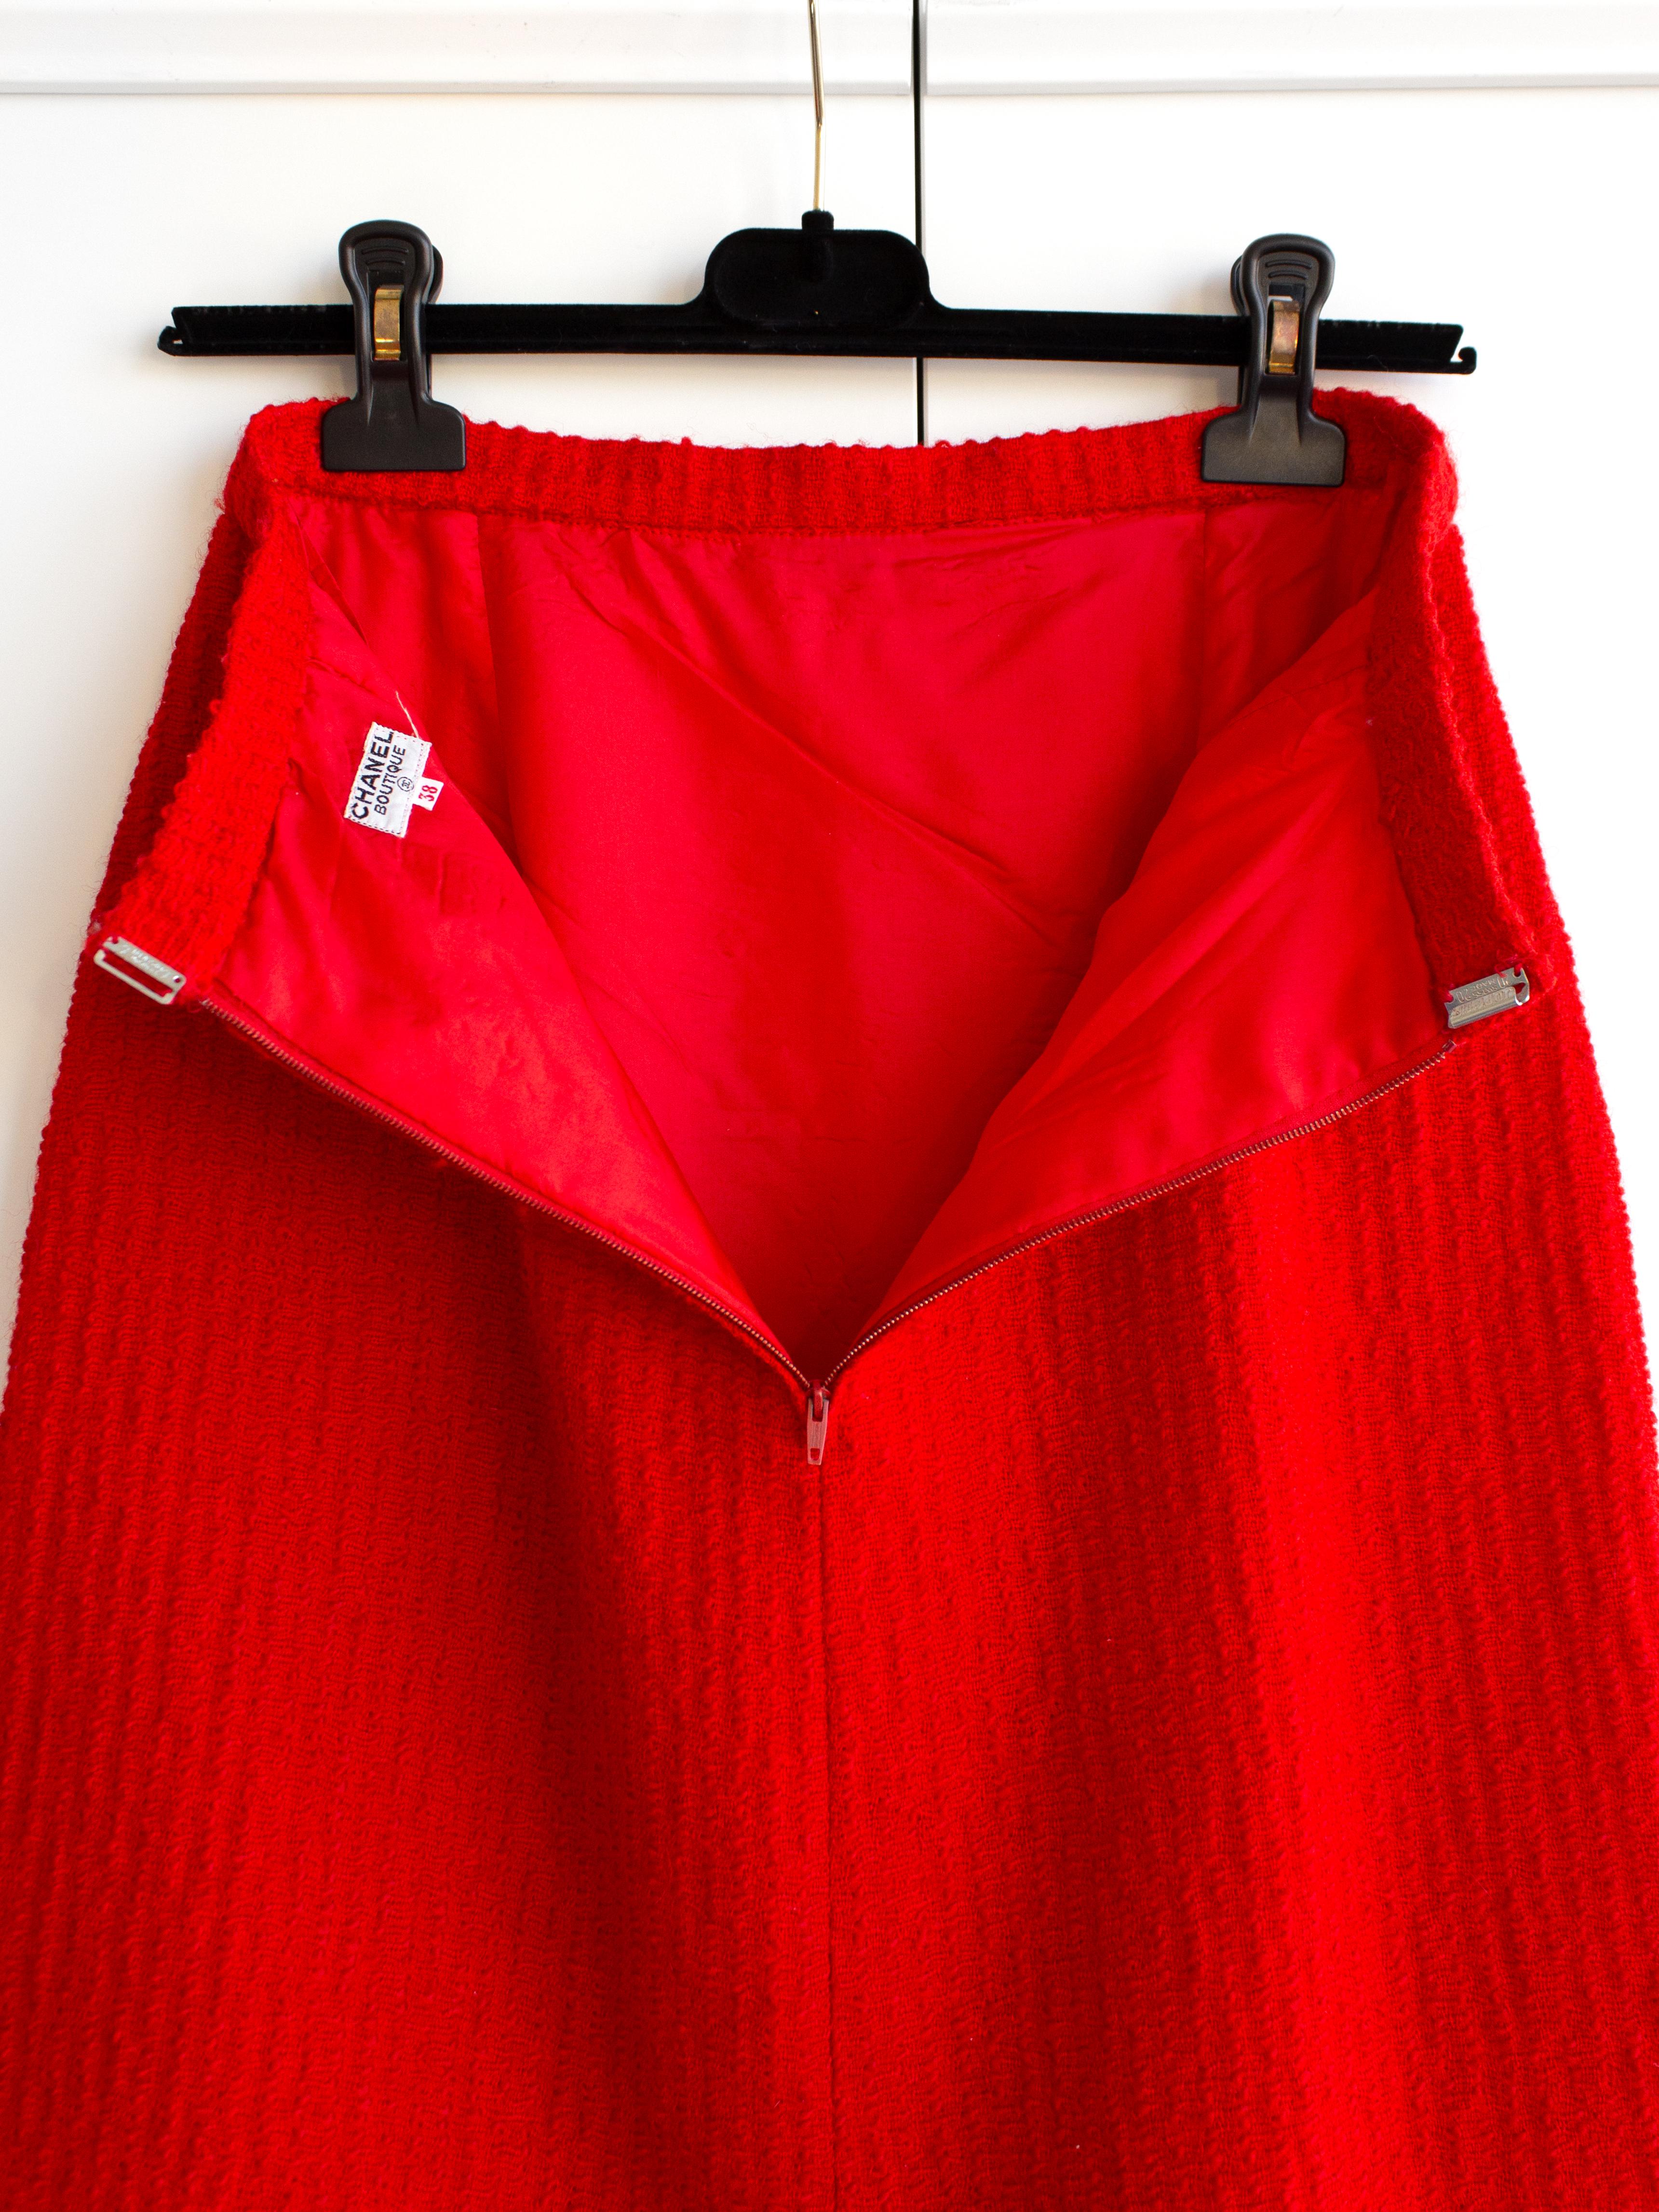 Chanel Vintage 1981 Parisian Red Gold Lion Tweed Jacket Skirt Suit For Sale 10